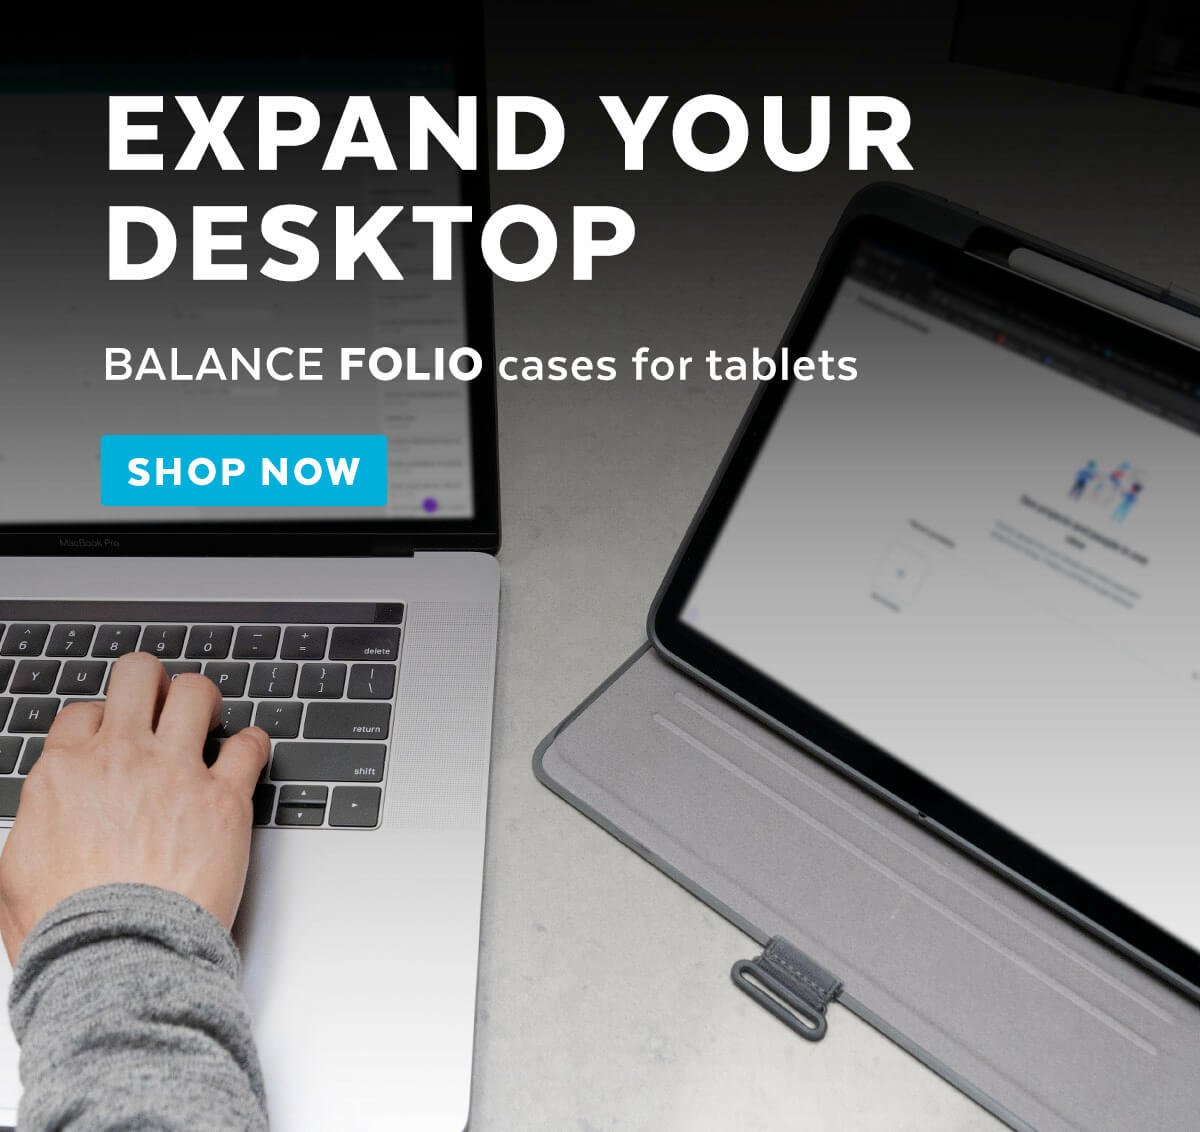 Expand your desktop. Balance Folio cases for tablets. Shop now.